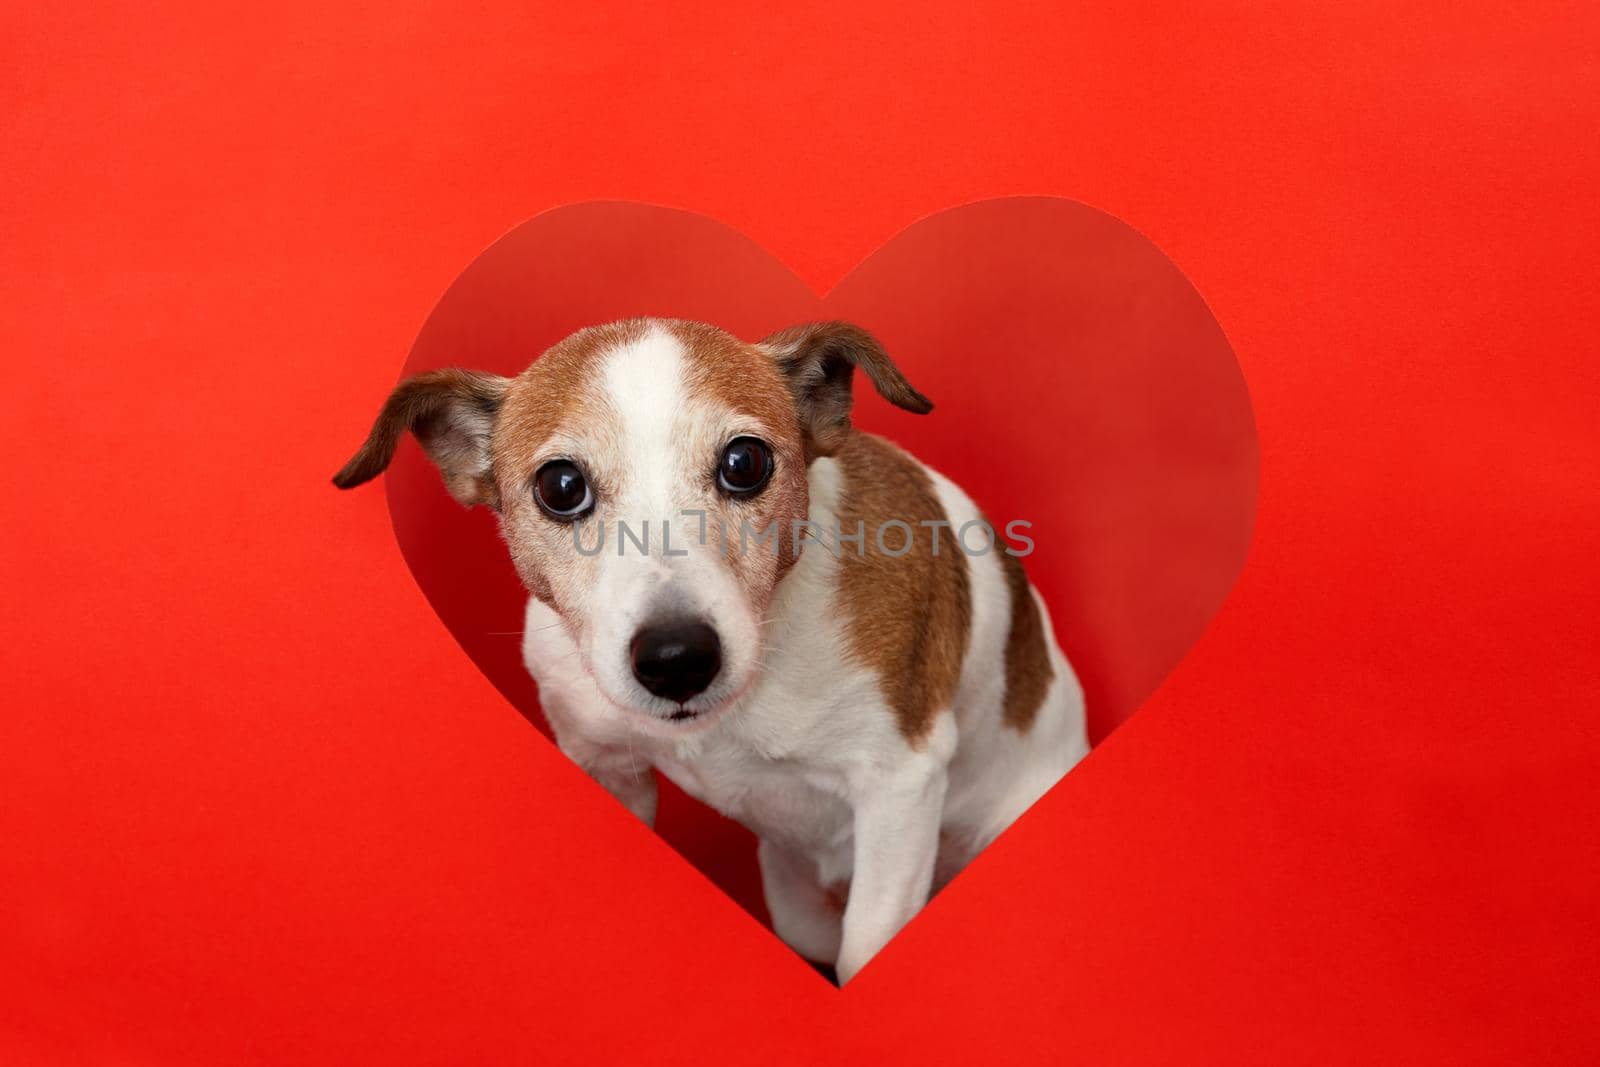 Dog peeking out heart shaped paper hole by Demkat